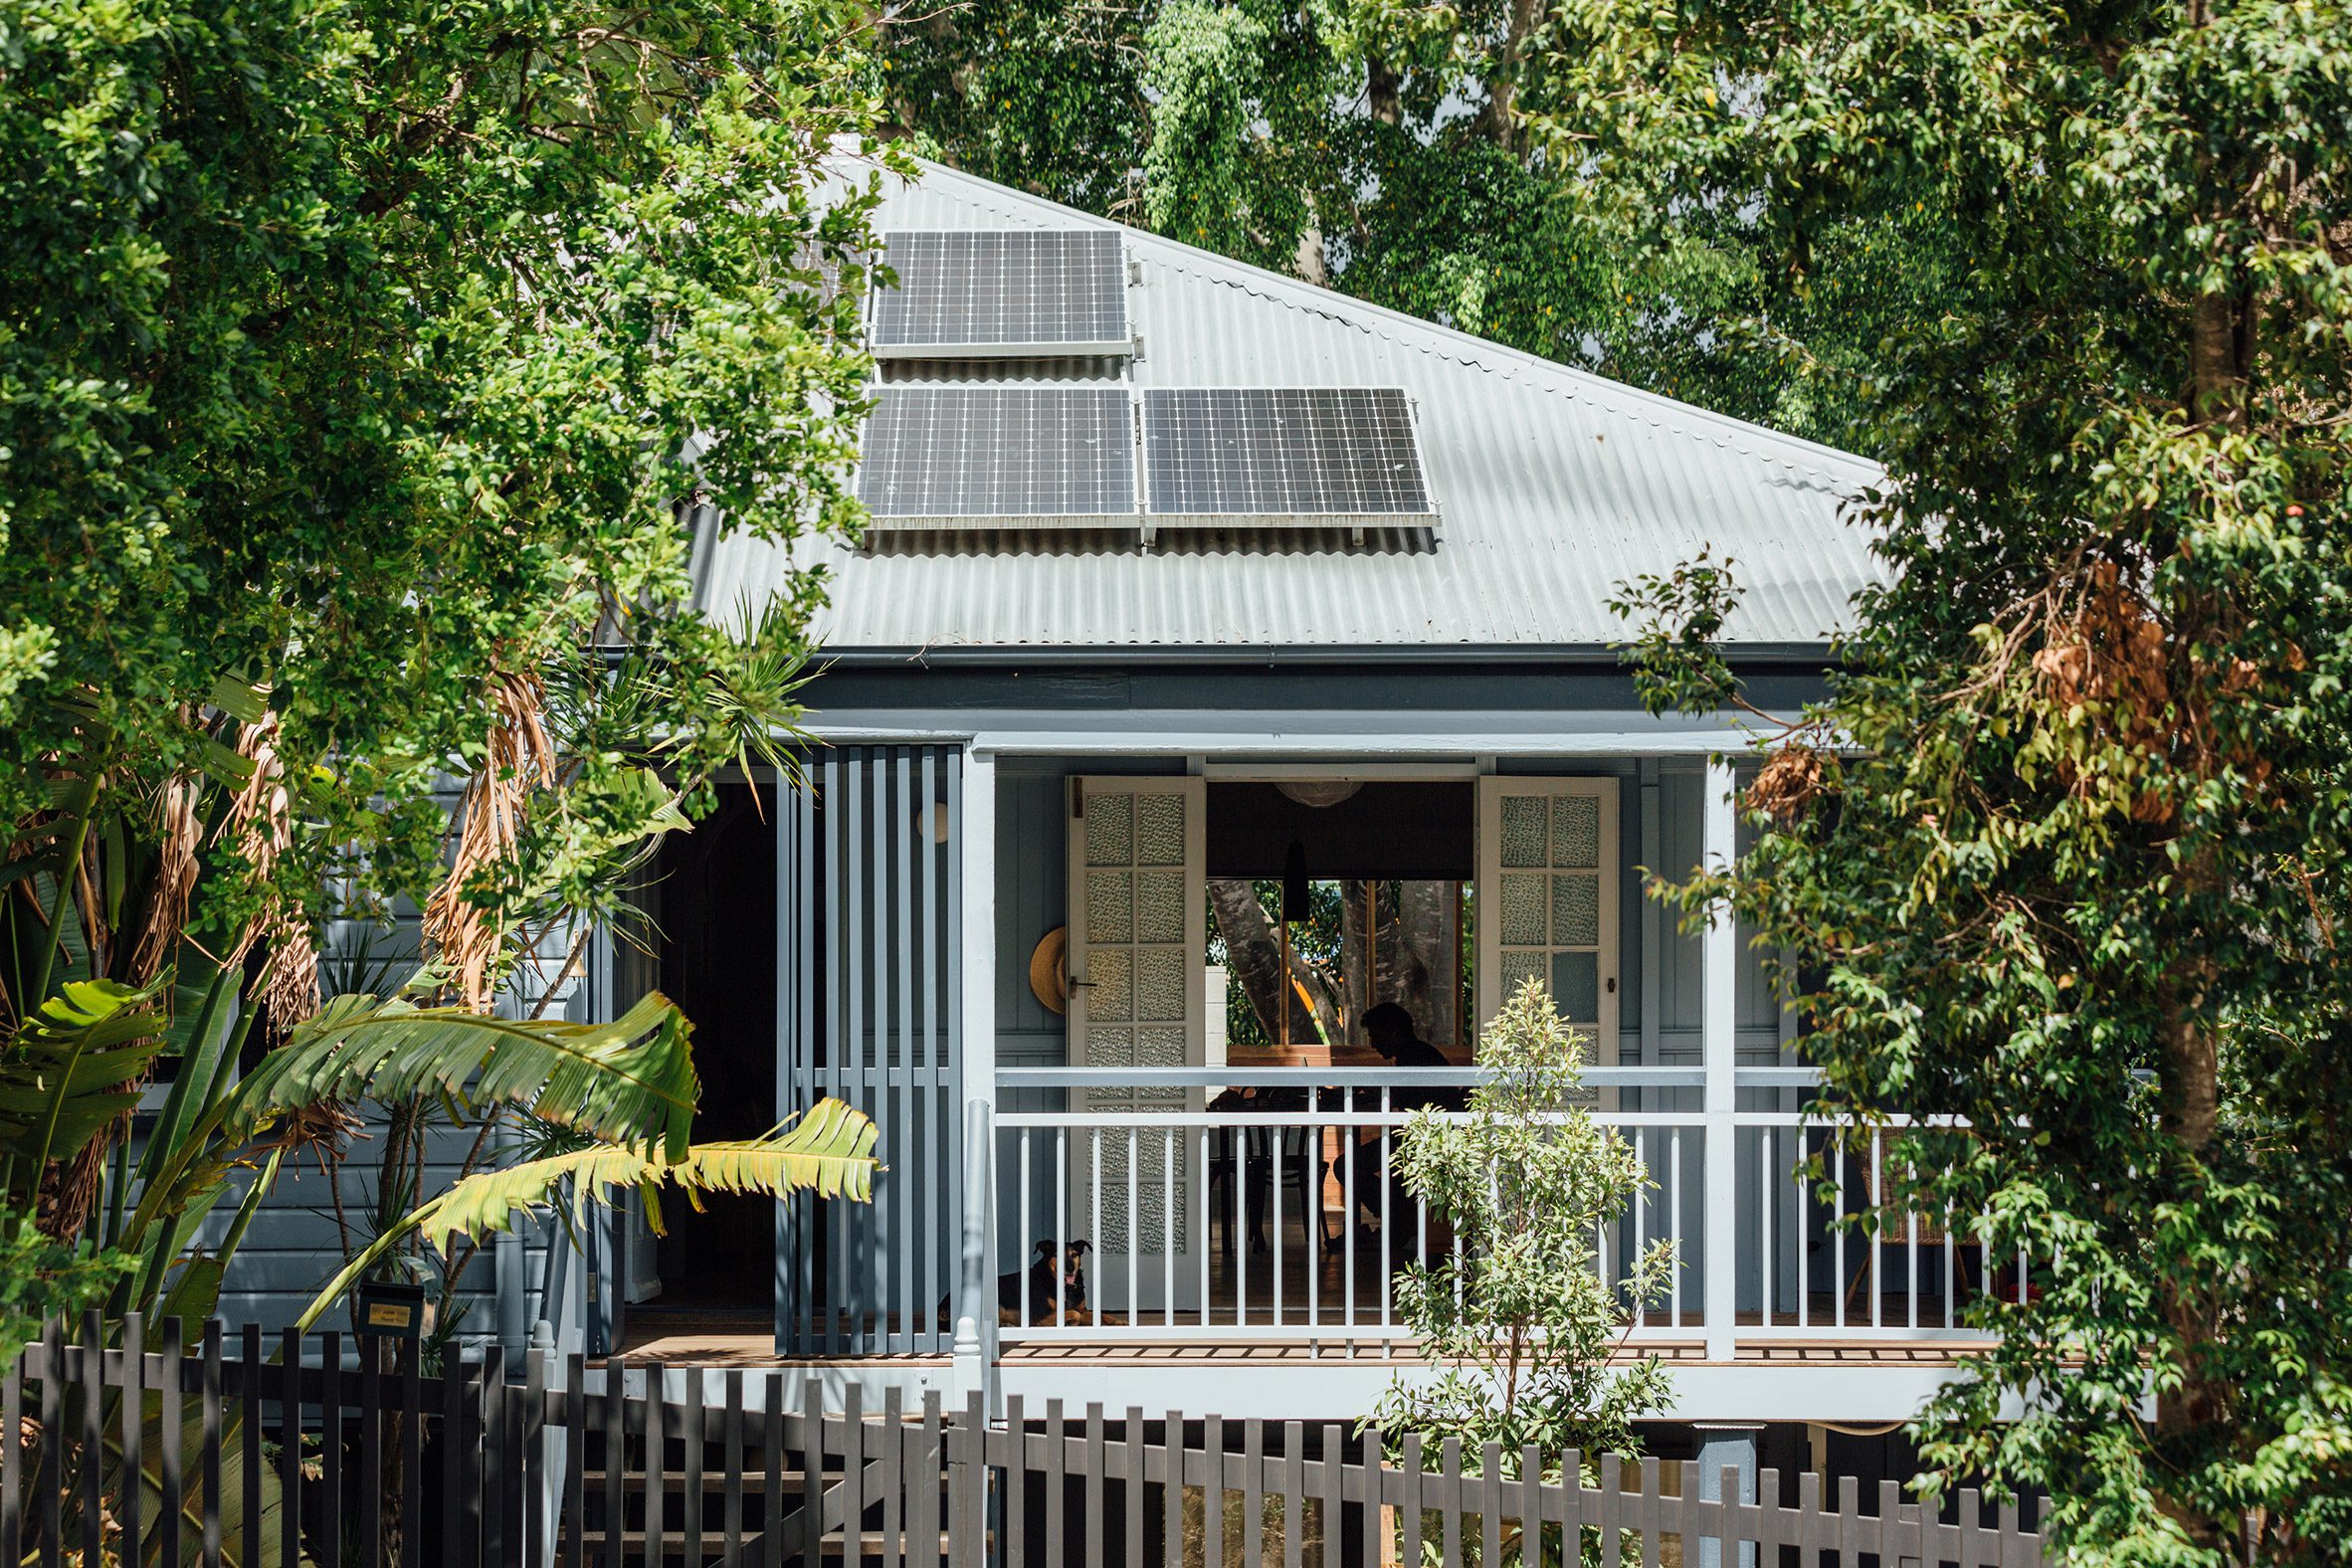 The Queenslander cottage was renovated by Nielsen Jenkins